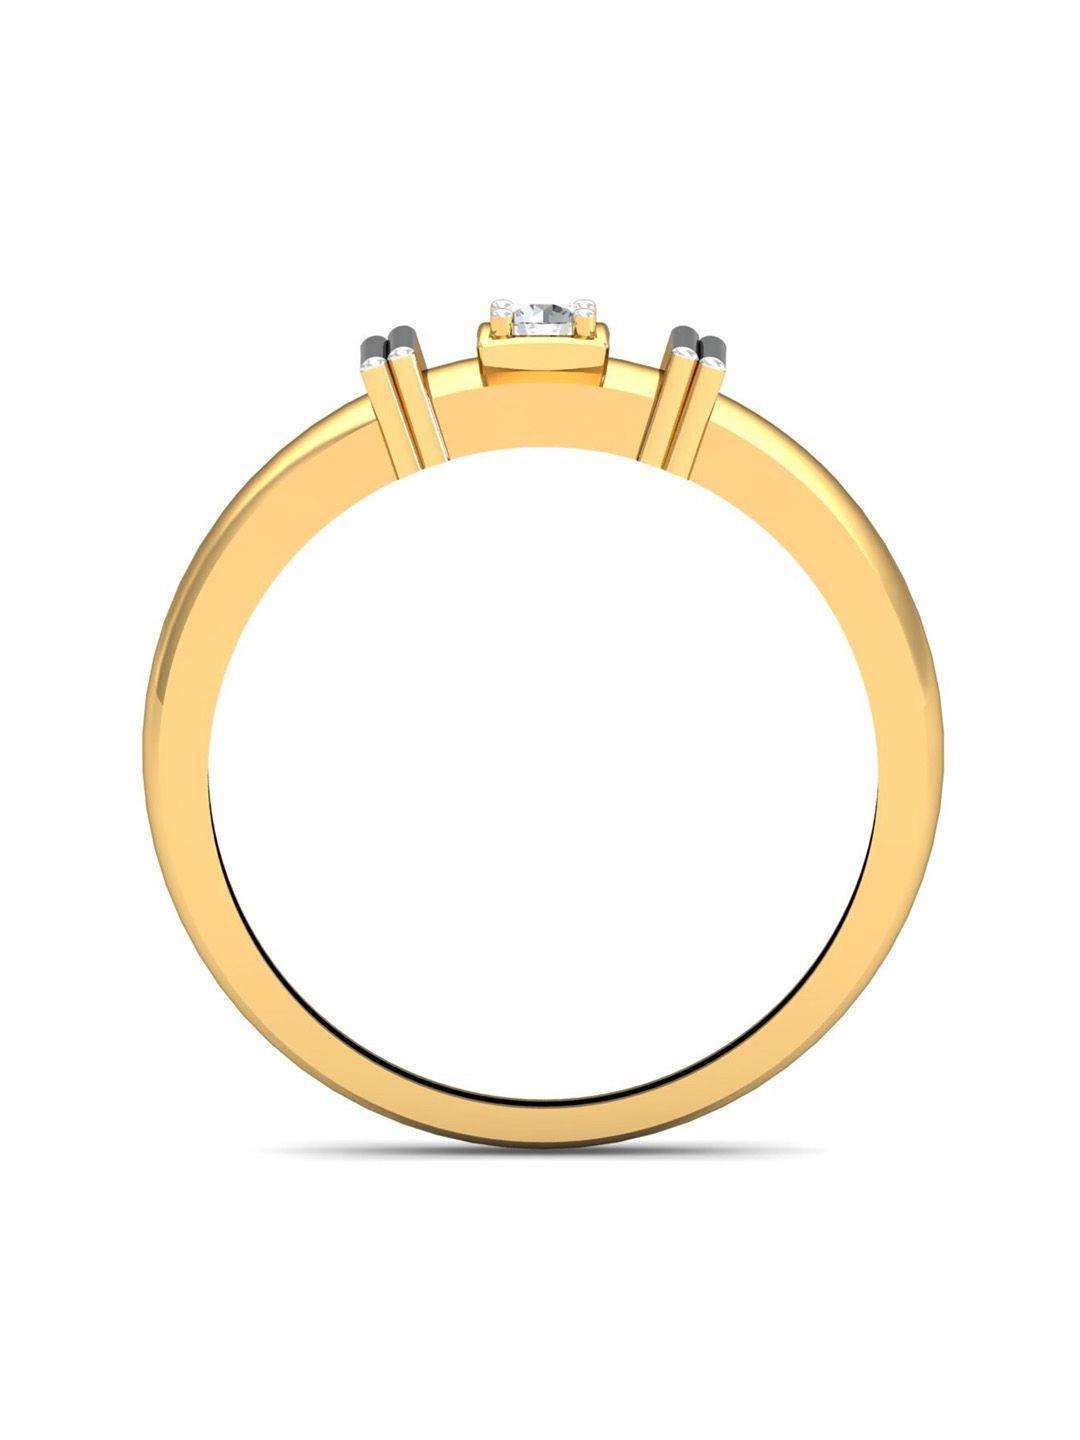 kuberbox men diamond-studded 18kt gold ring - 3.4 gm